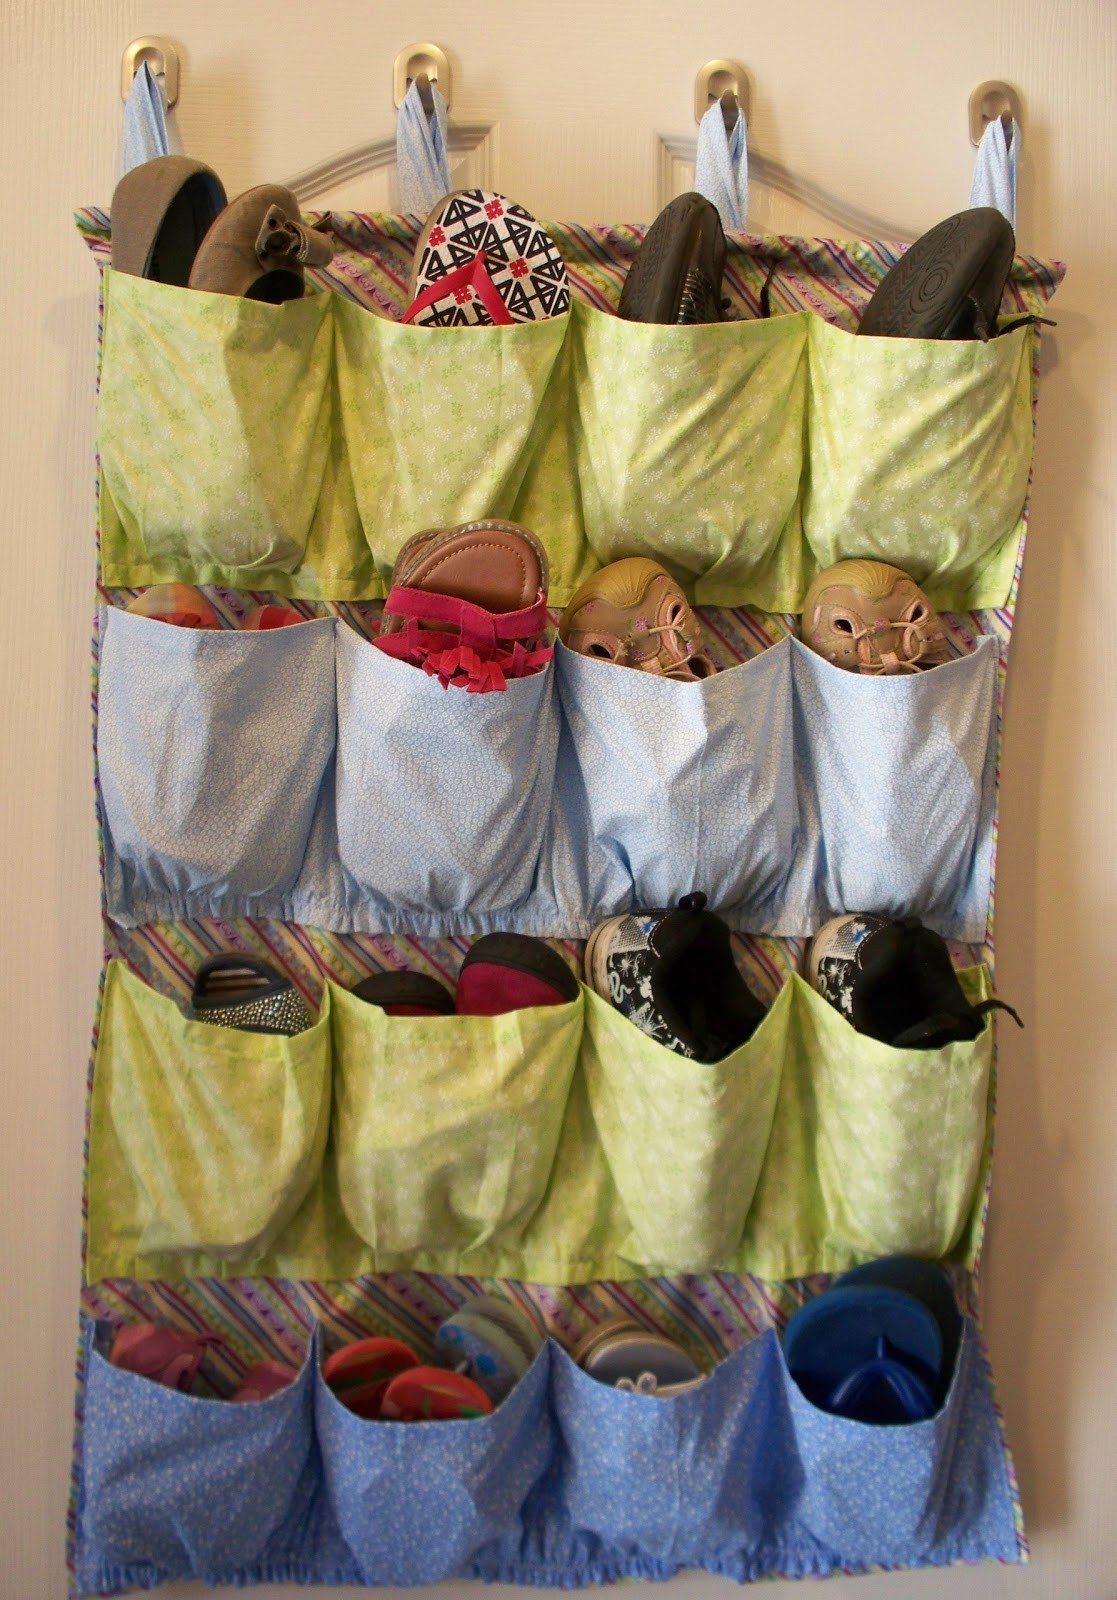 DIY Hanging Shoe Rack
 Sew It Yourself Shoe Organizer Adventures of a DIY Mom